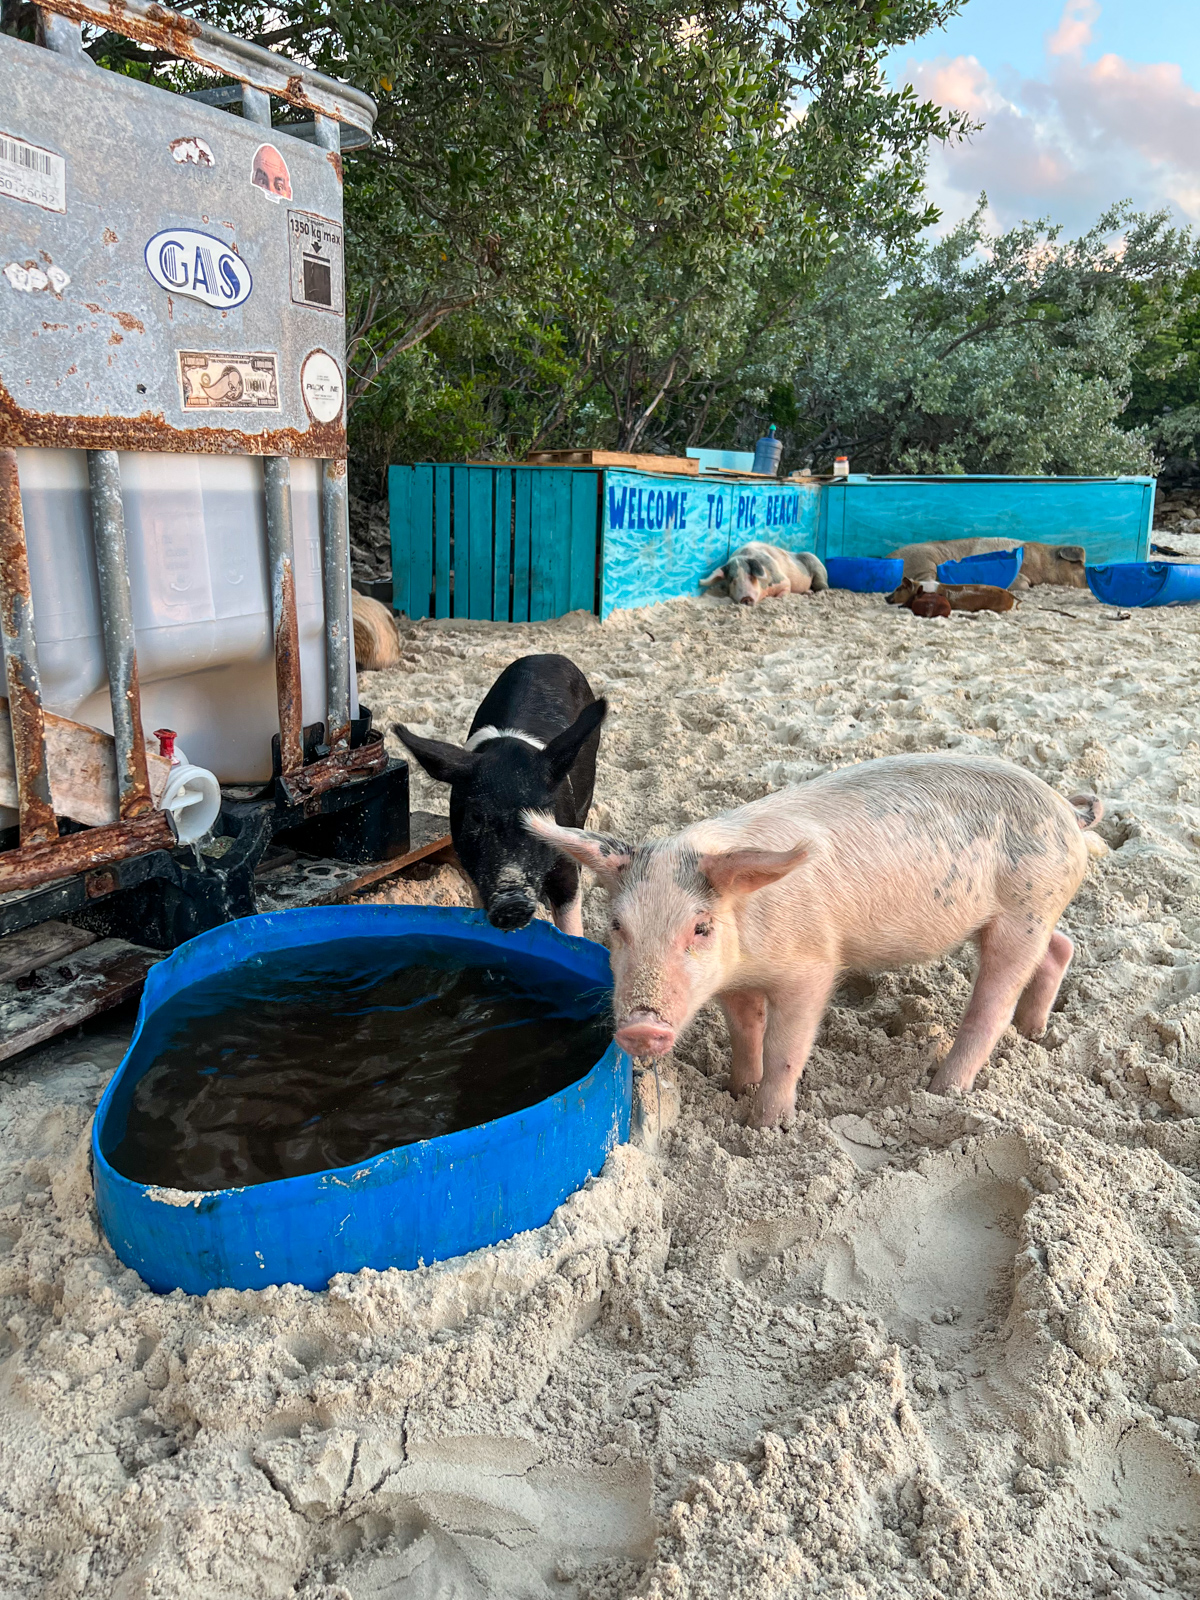 Little pigs drinking fresh, clean water